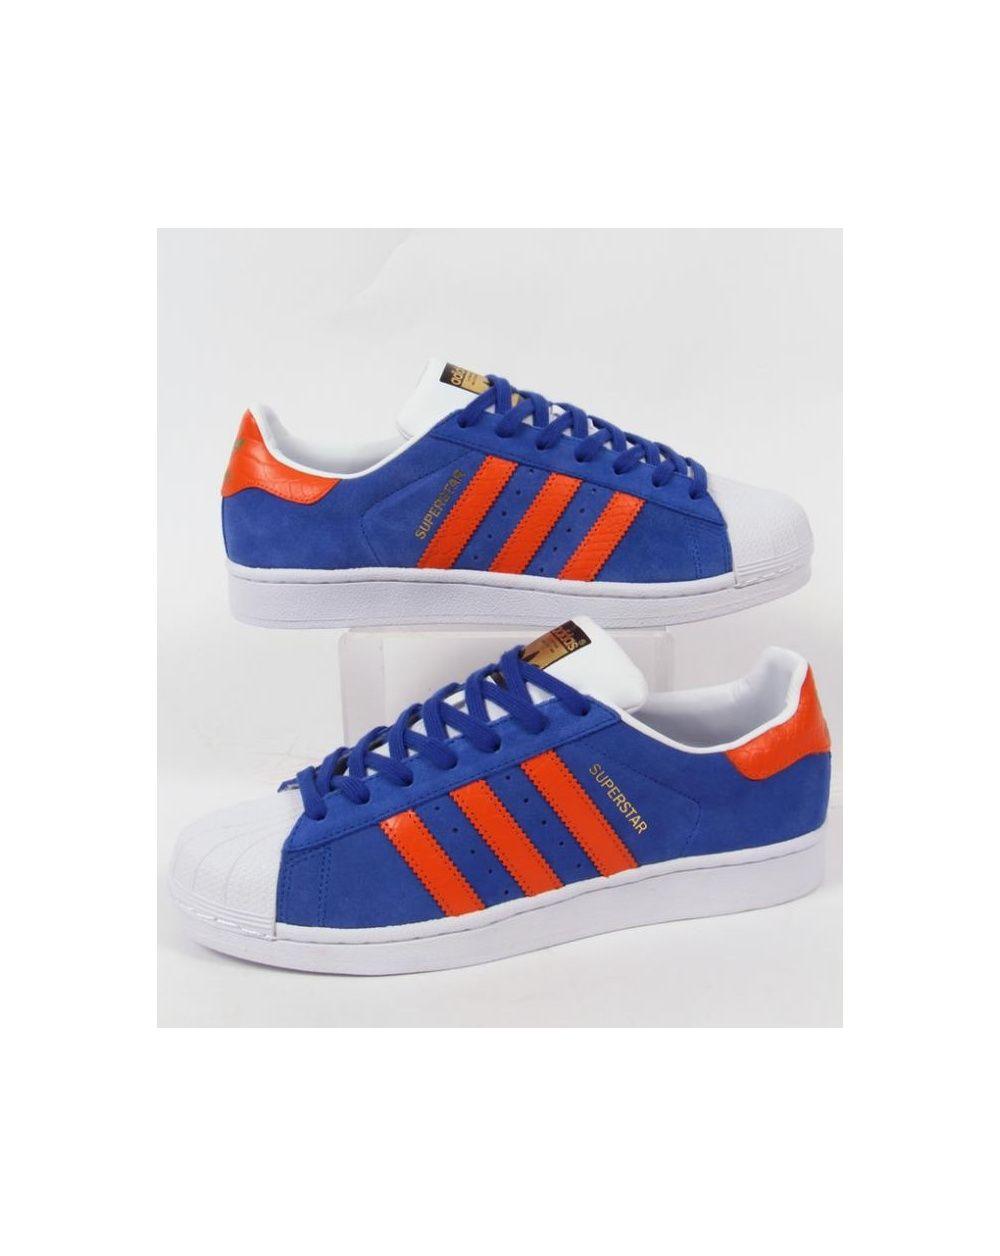 Blue and White with Orange Logo - Adidas Superstar Trainers Blue Orange White, Originals, Shell Toe